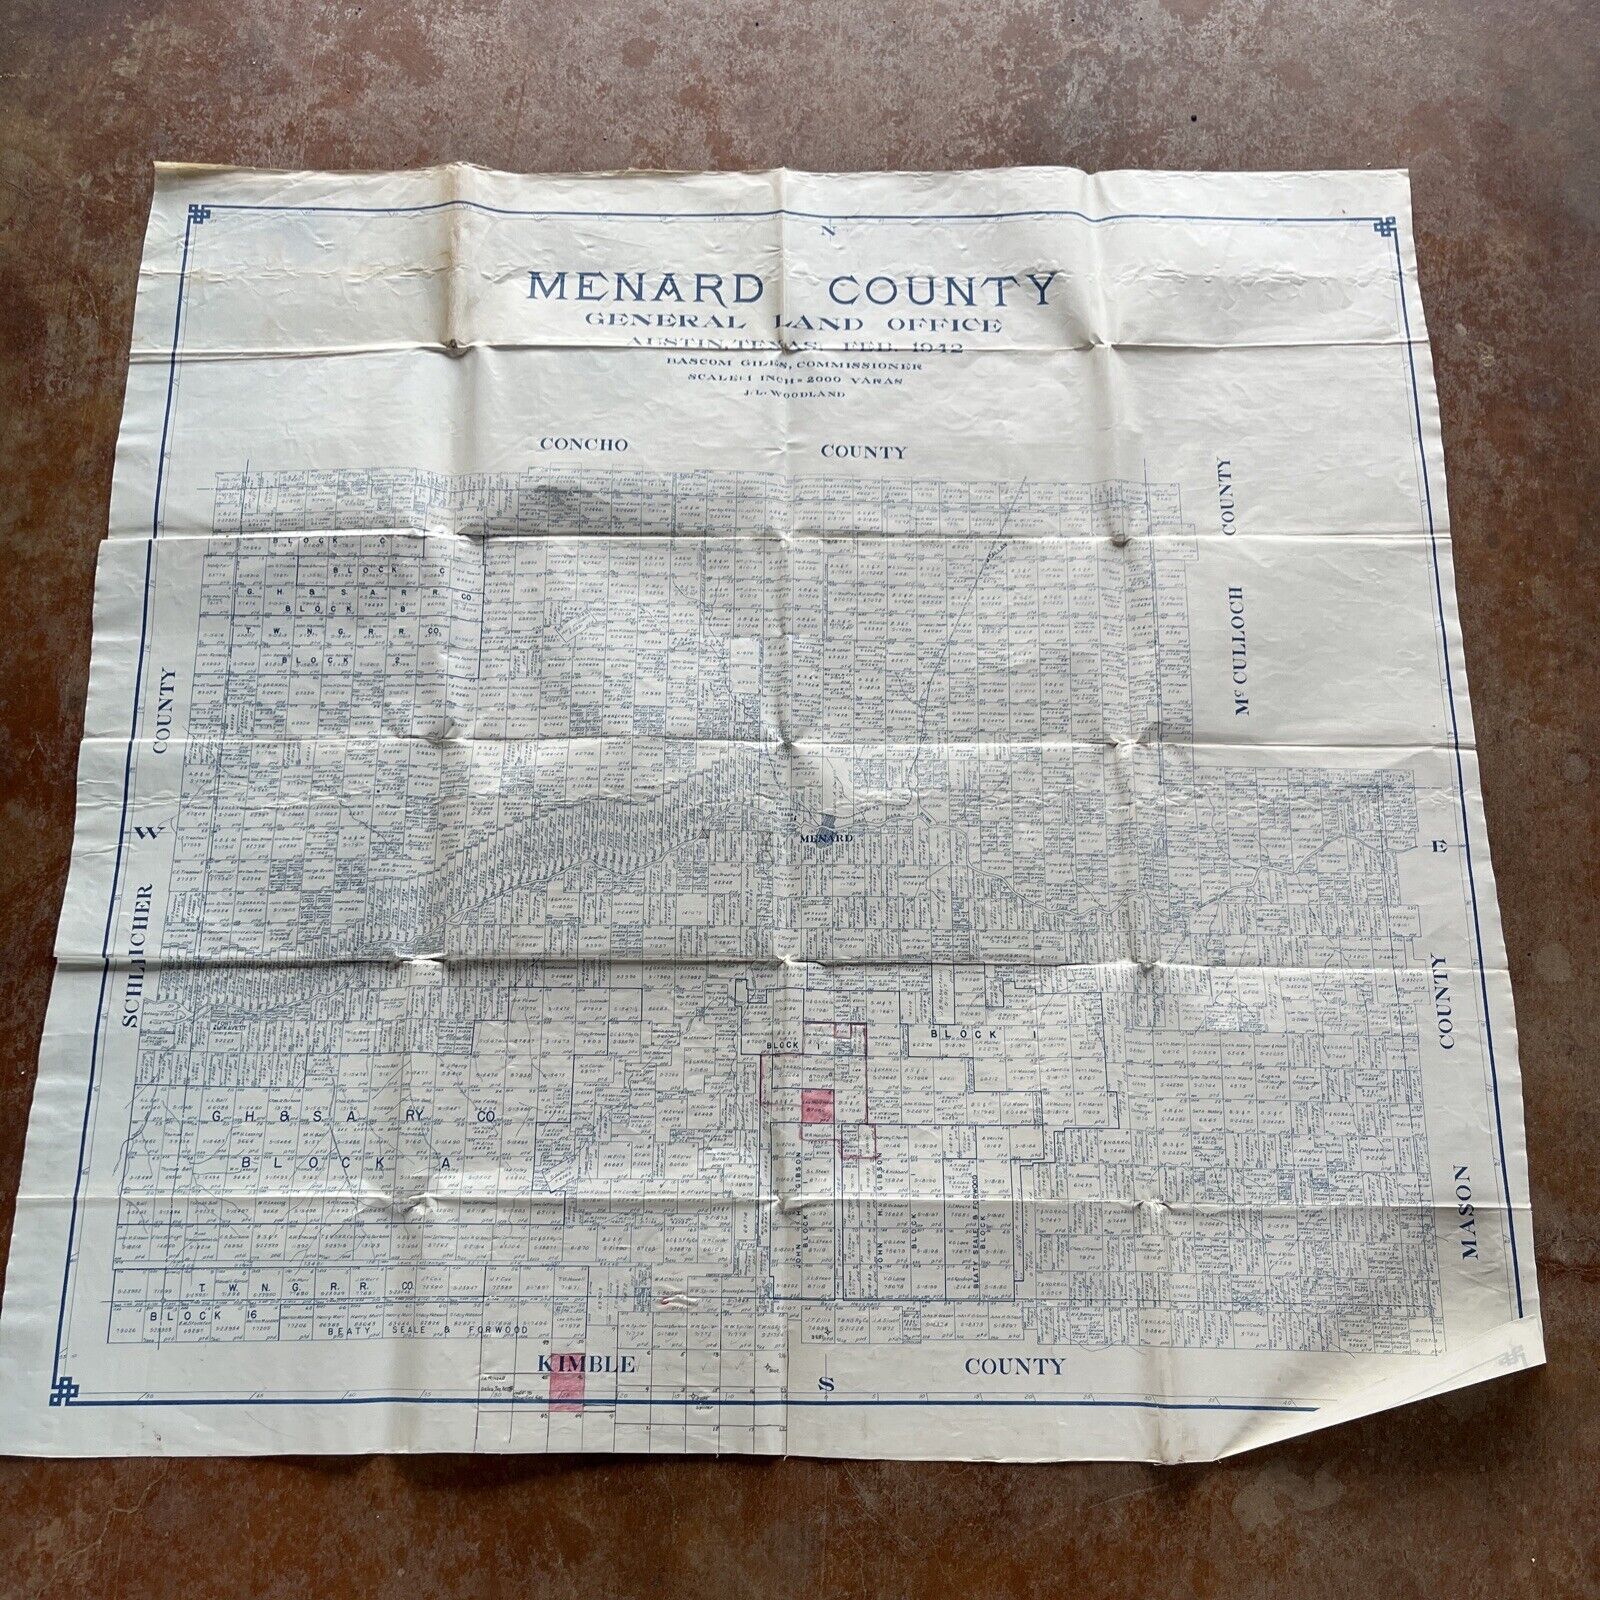 Menard County Tx Texas General Land Office Map 1942 Austin J.L Woodland